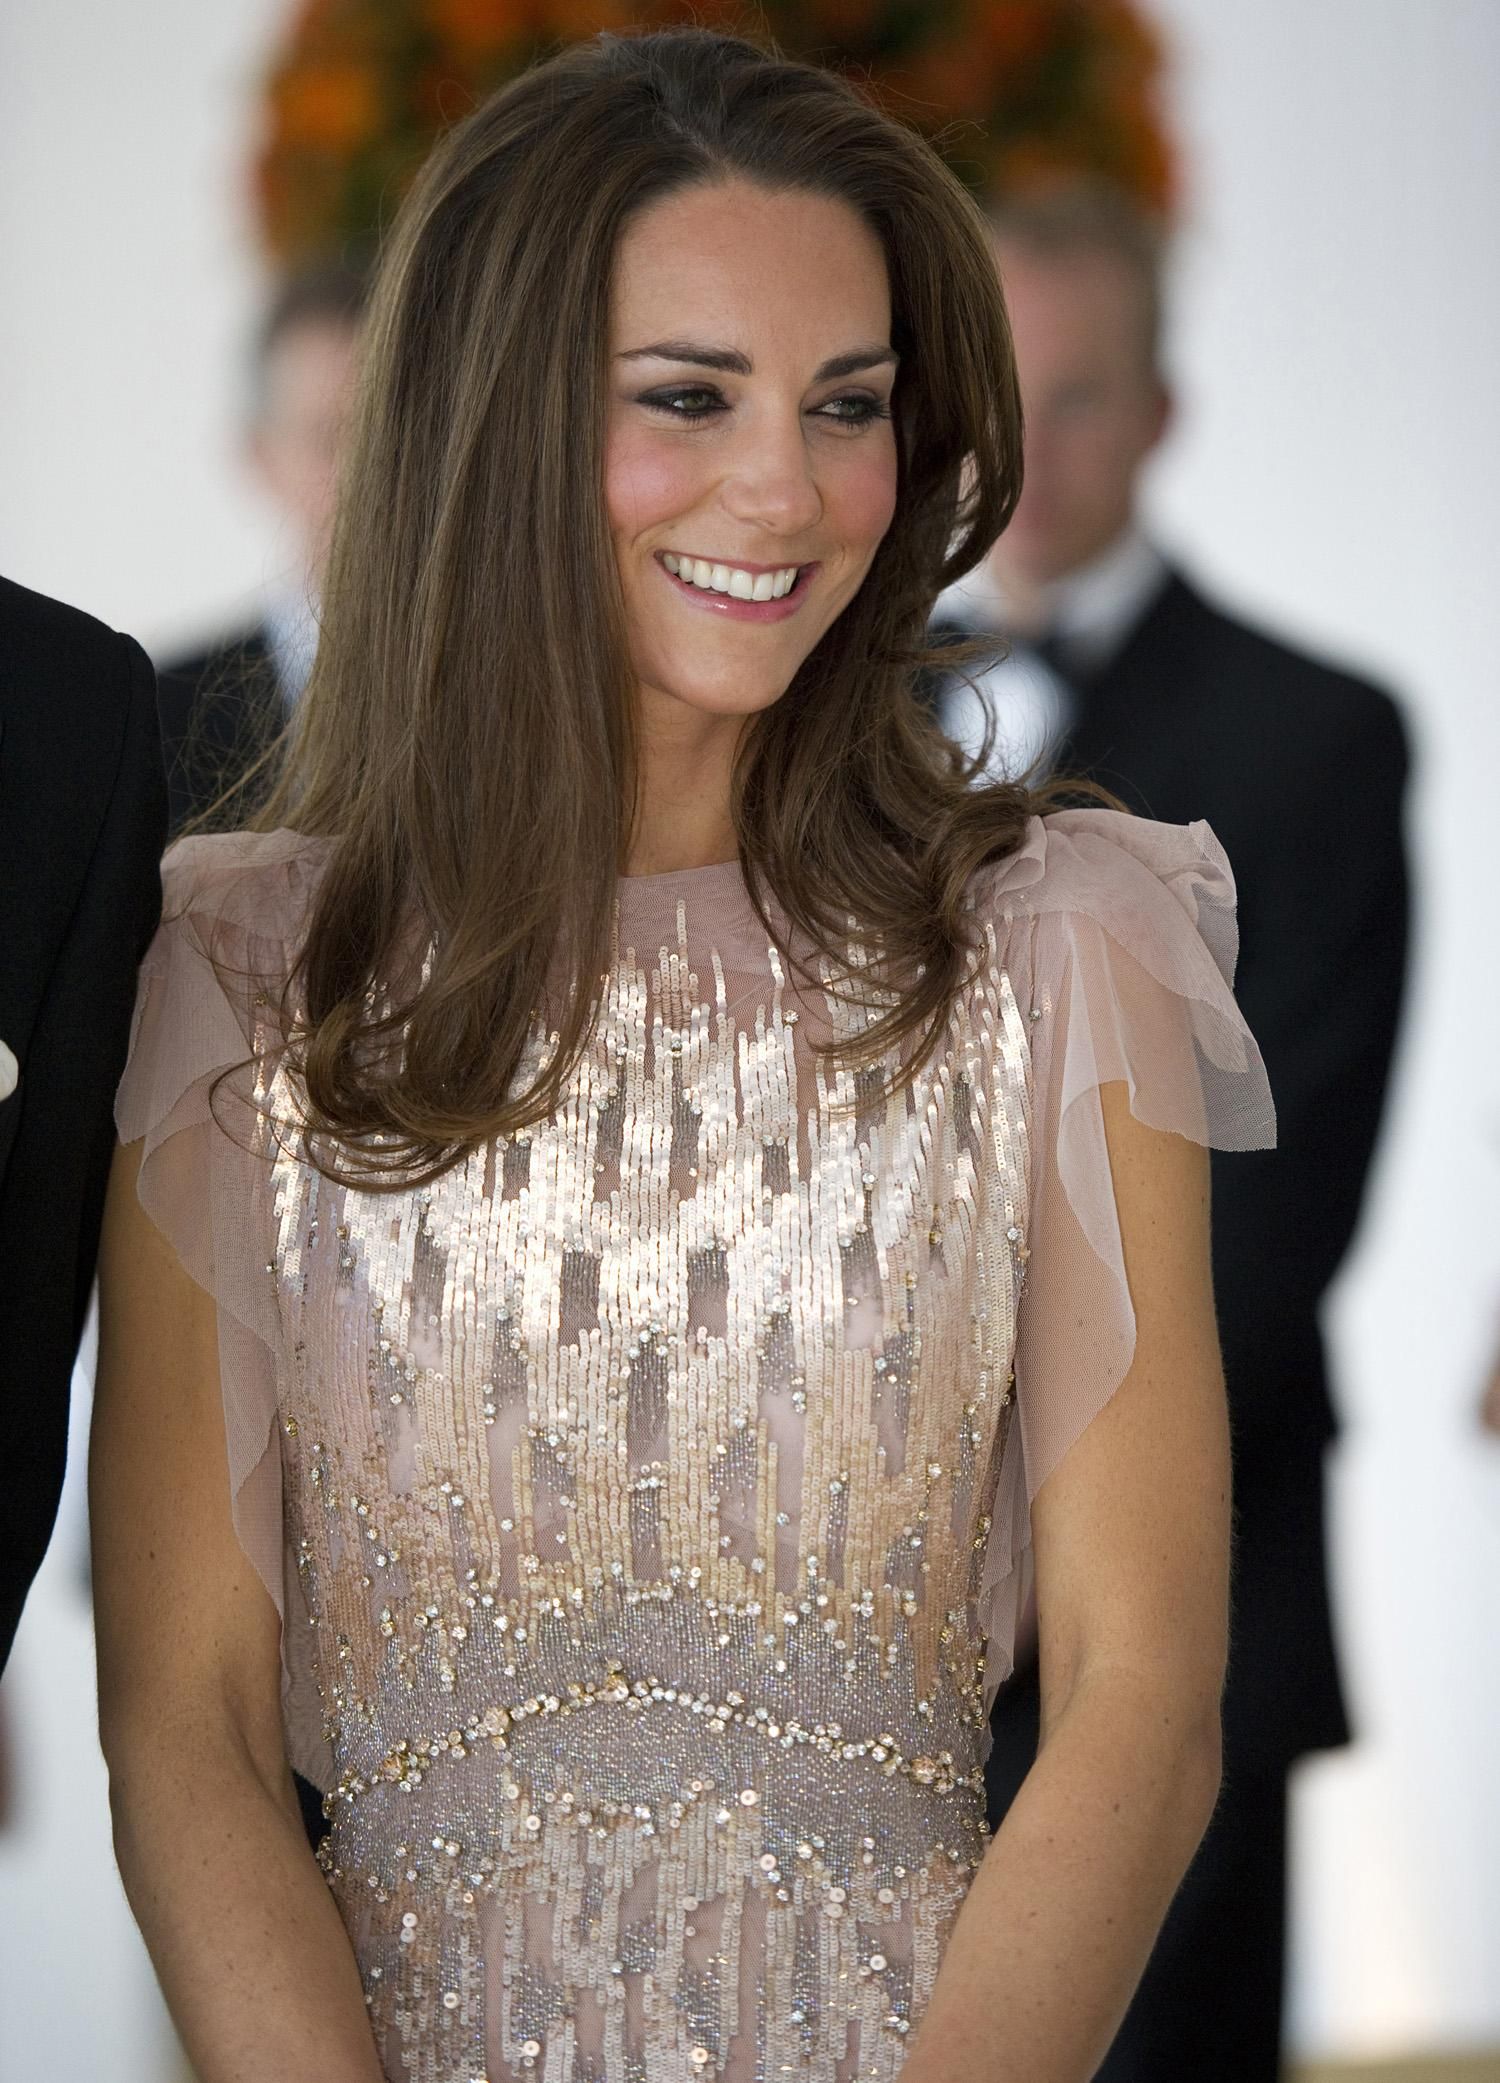 Kate Middleton Shower Won’t Happen, According To Royal Experts